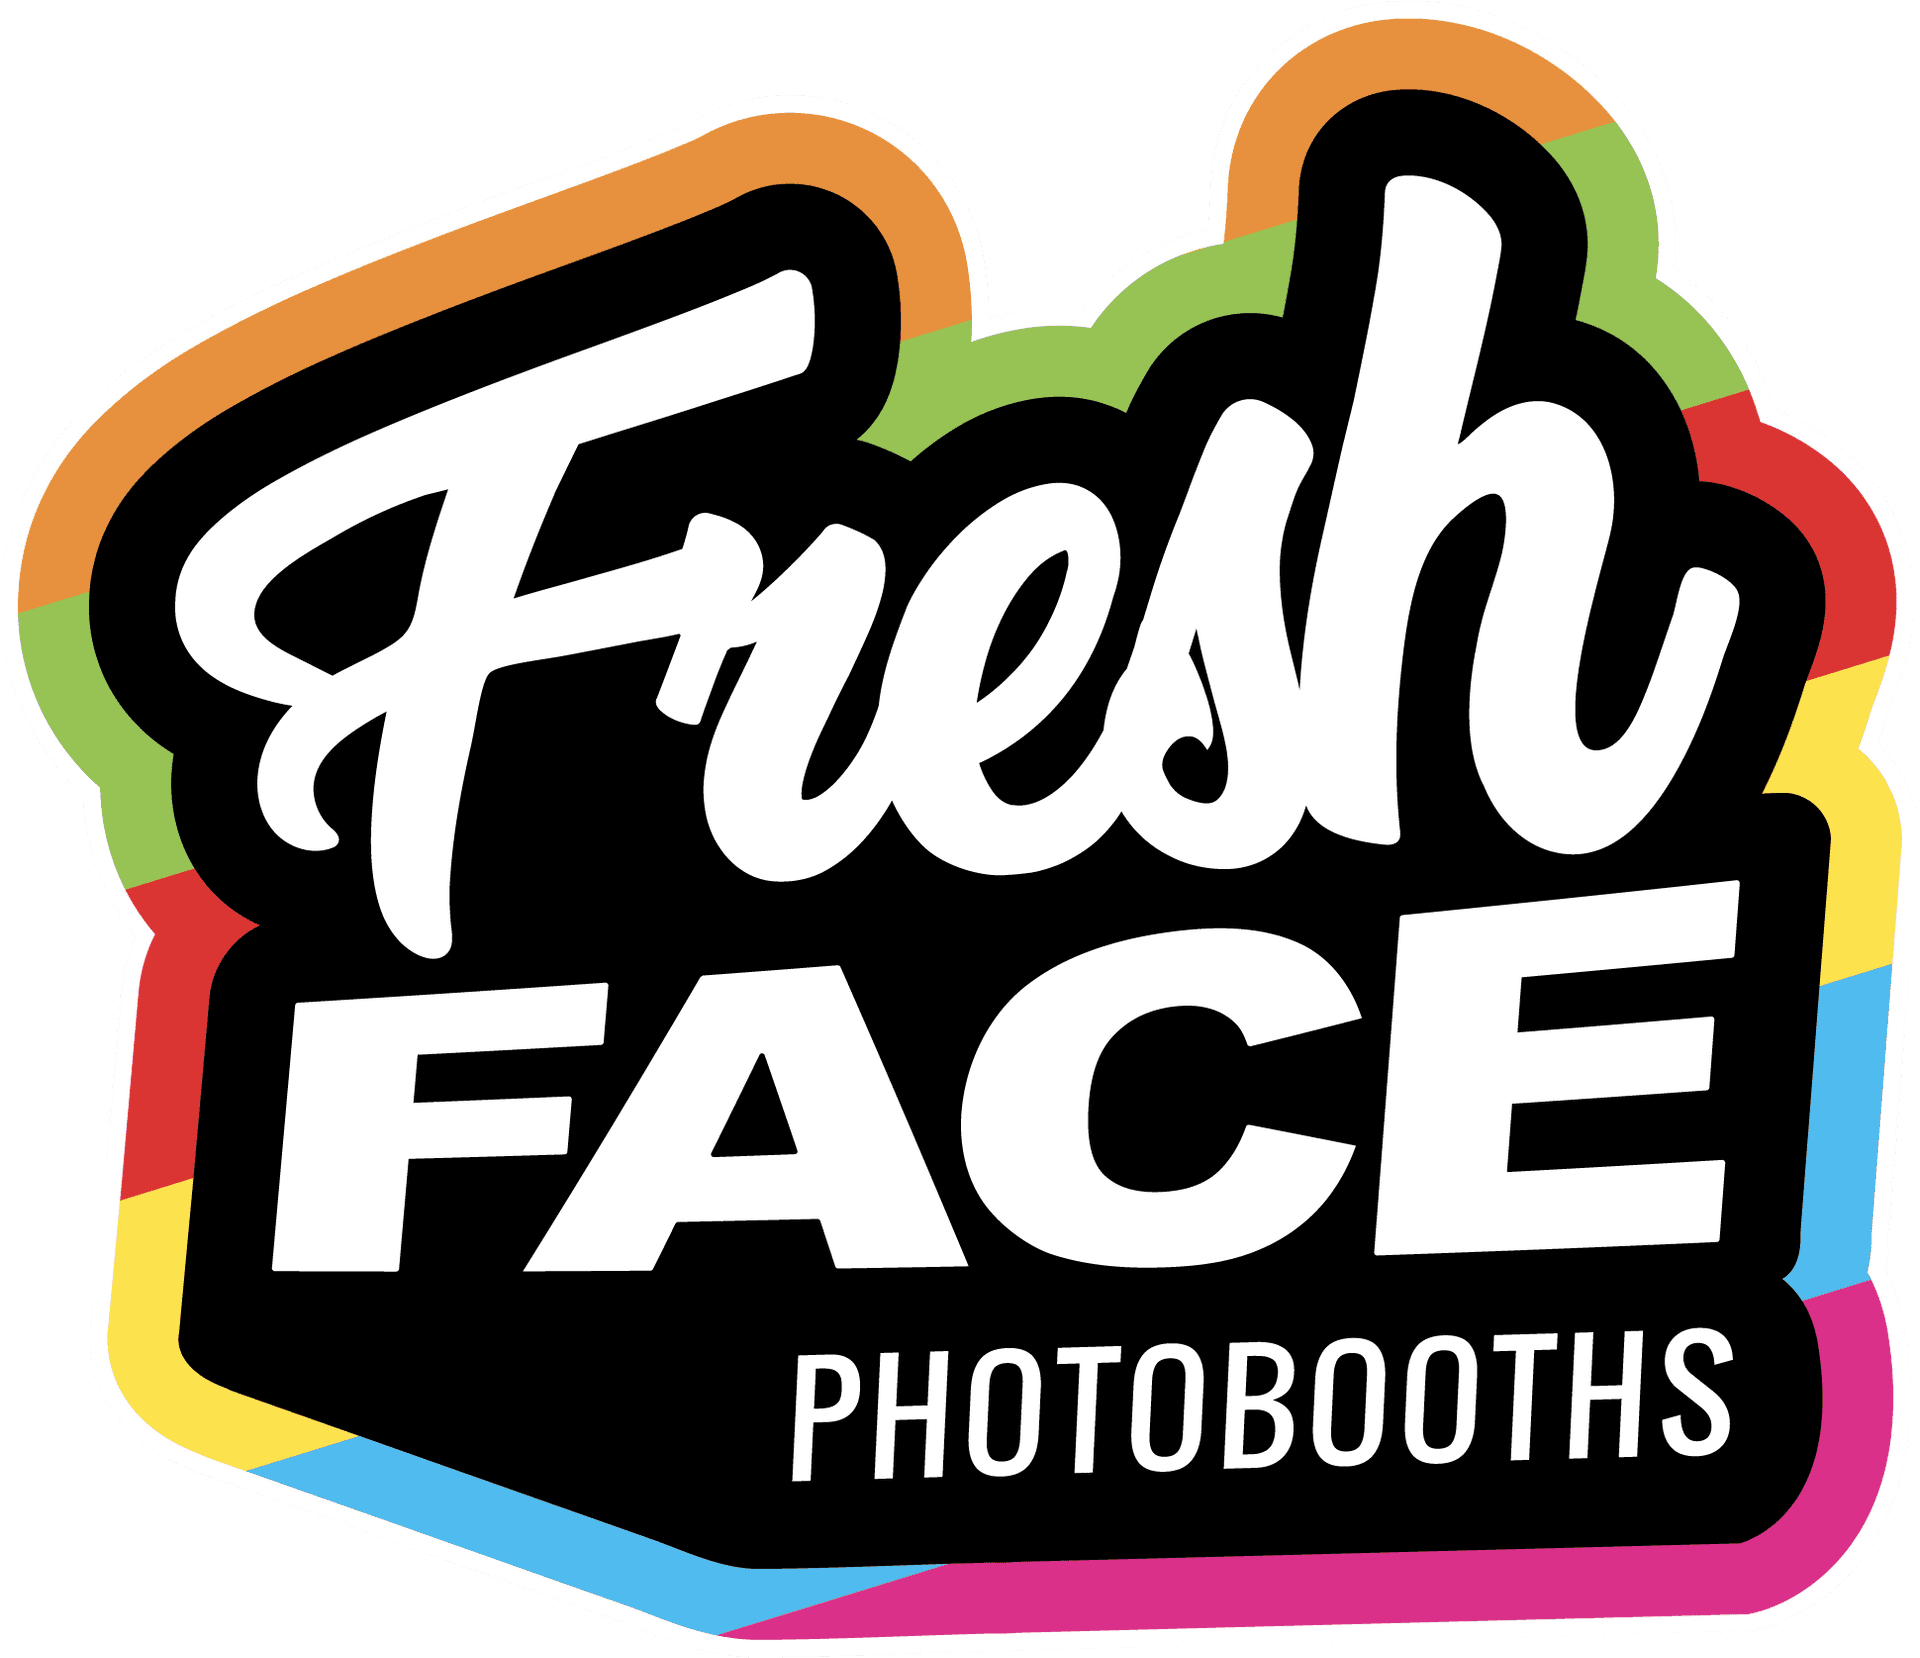 Fresh Face Photobooths Logo PNG image